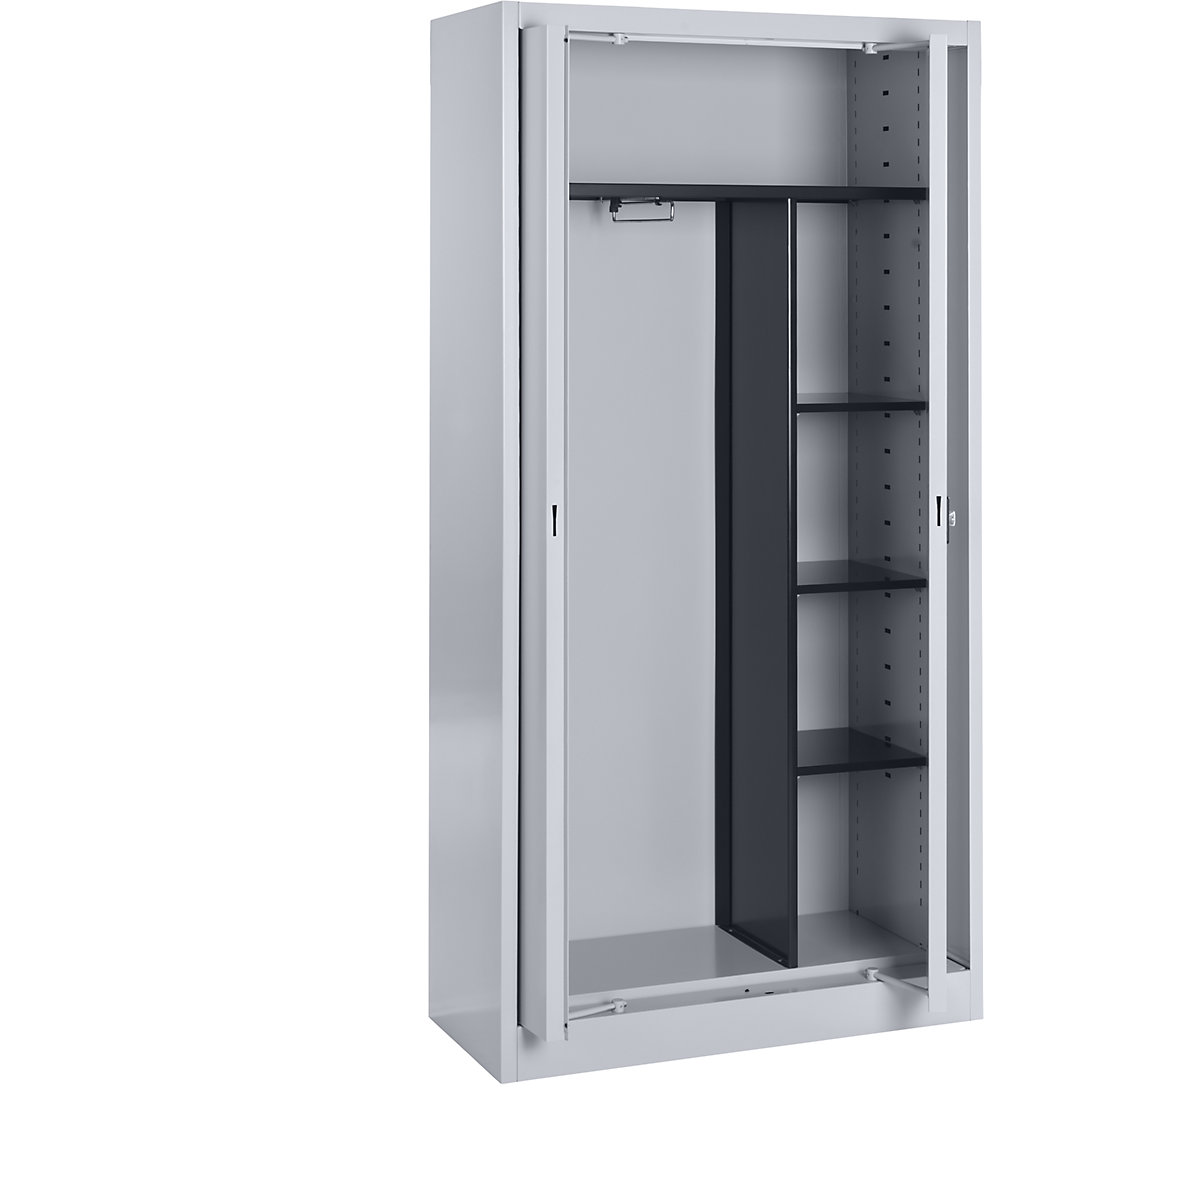 Steel cupboard with flush doors – mauser